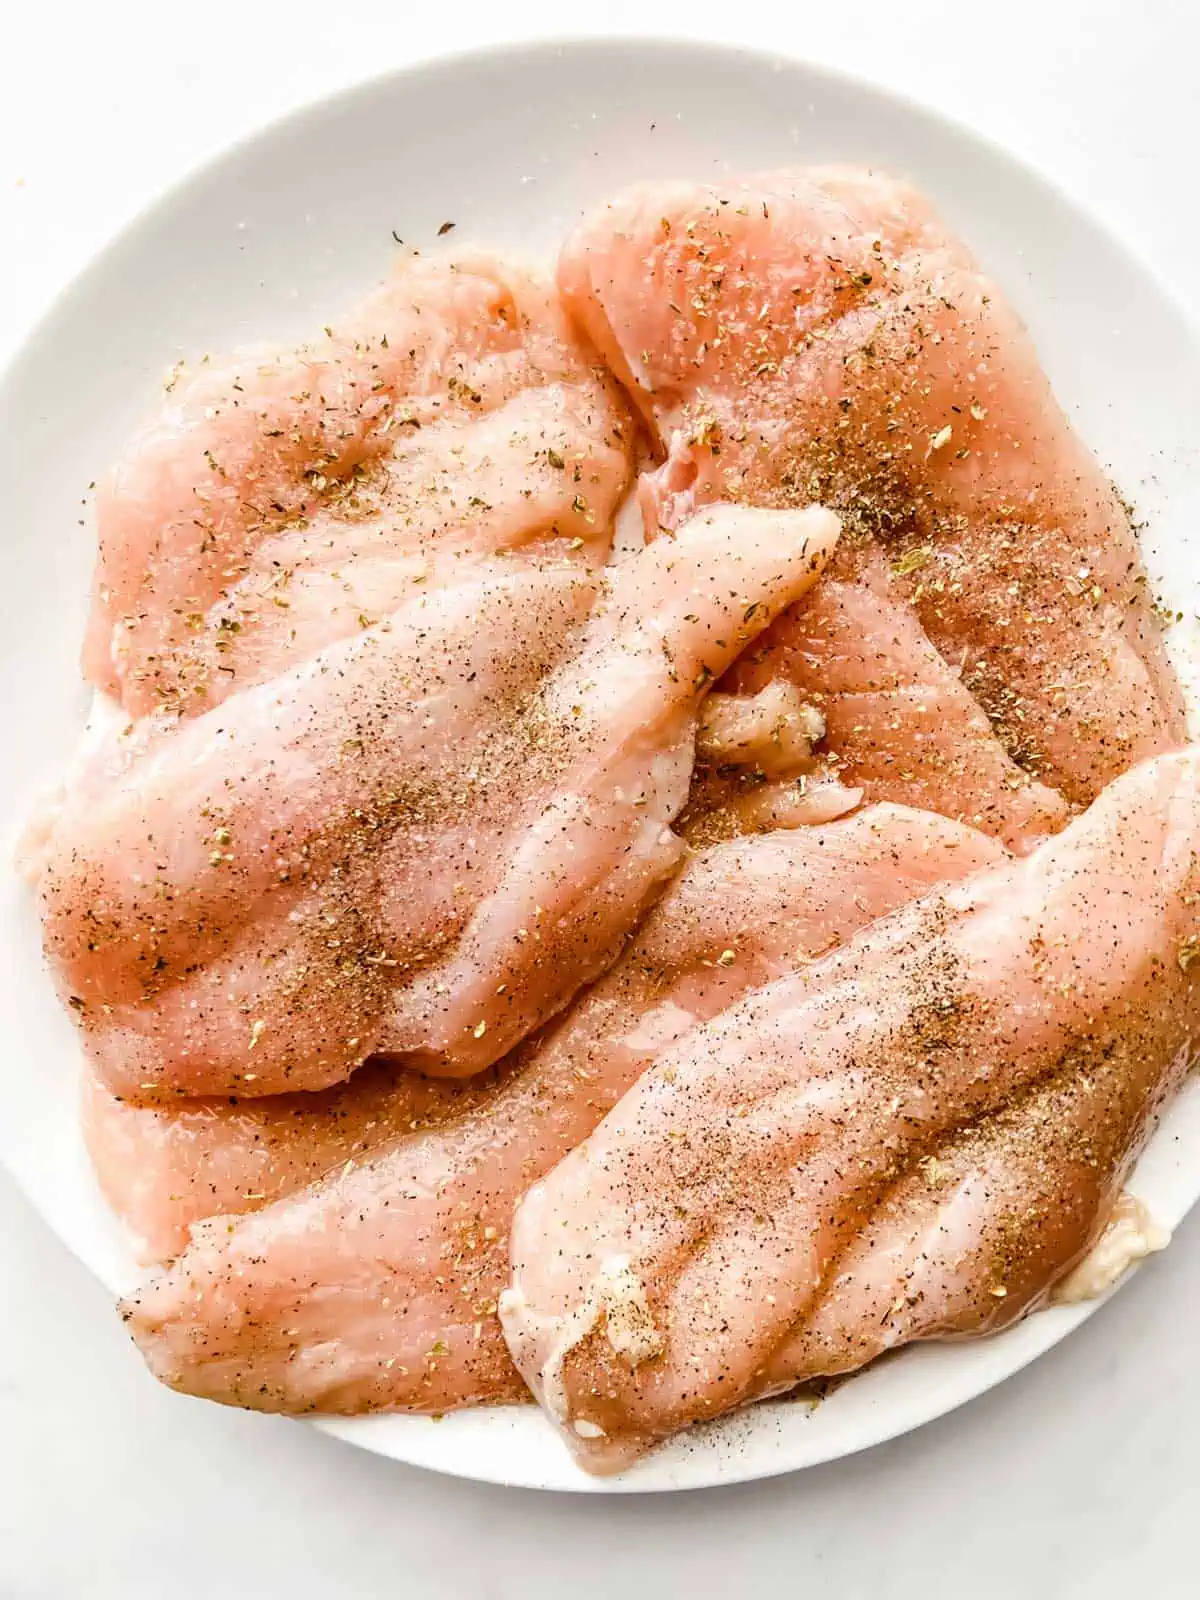 Photo of raw chicken that has been seasoned.